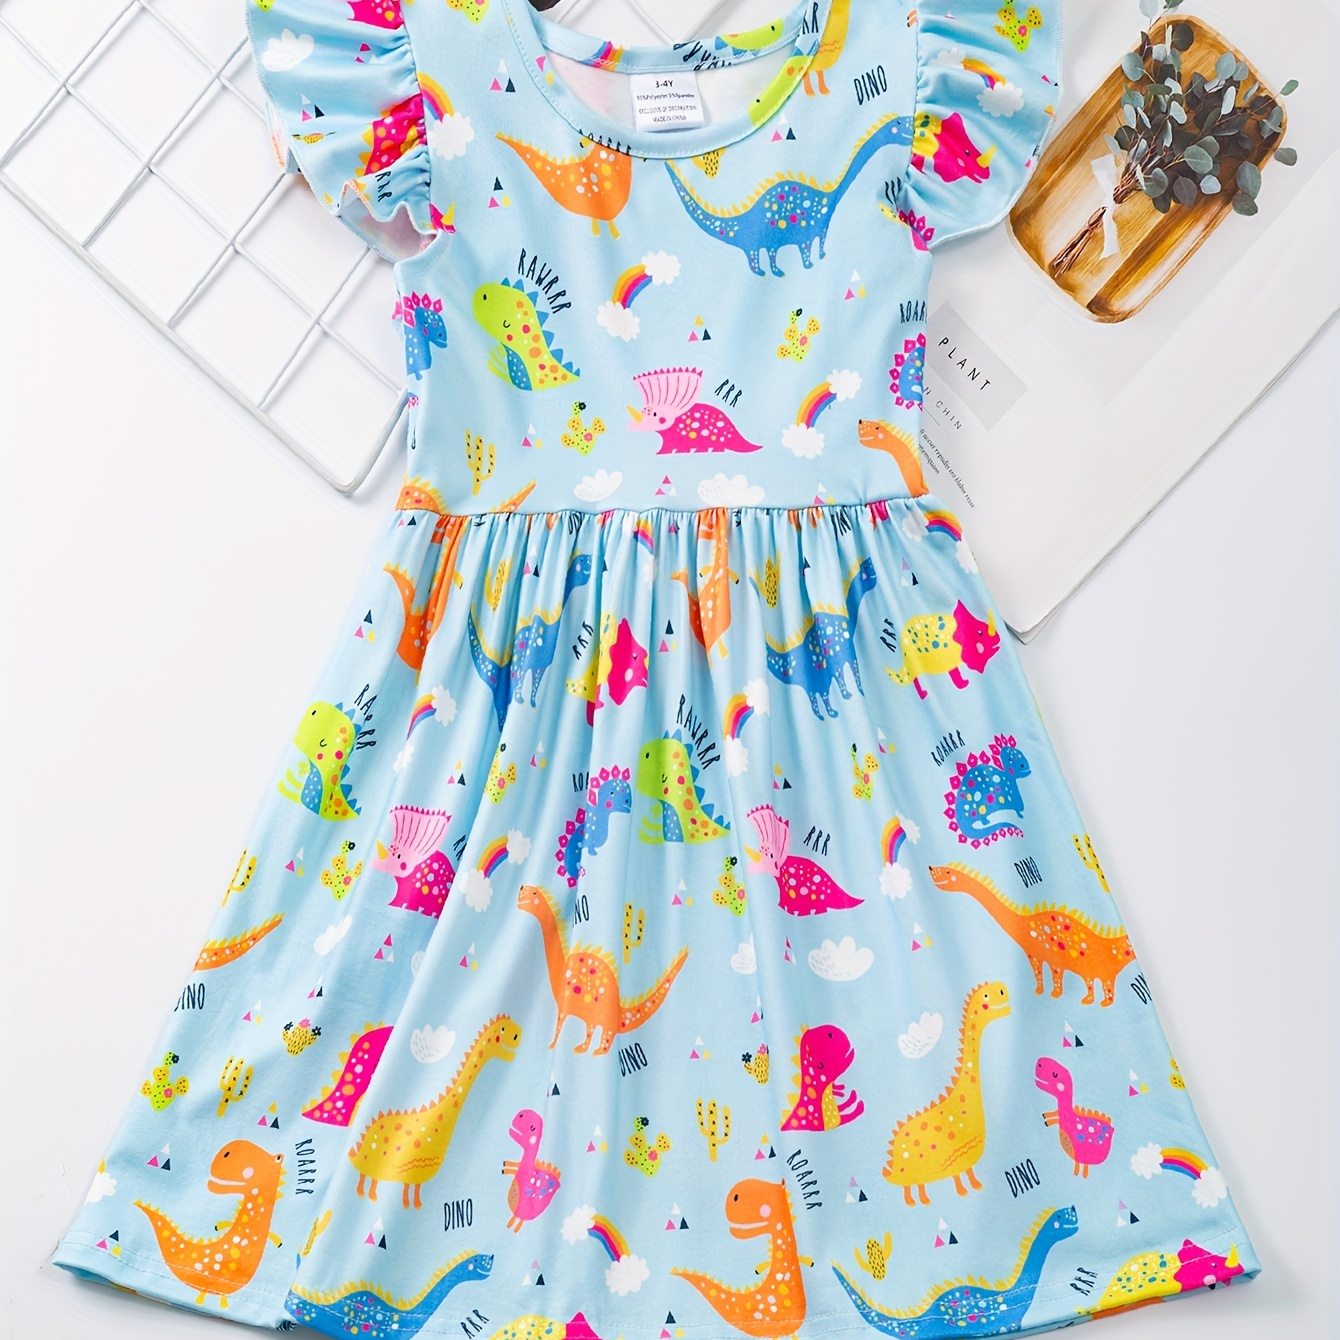 

Cartoon Dino Print Ruffle Trim Dress, Girls Stretchy Dresses For Summer Party Gift